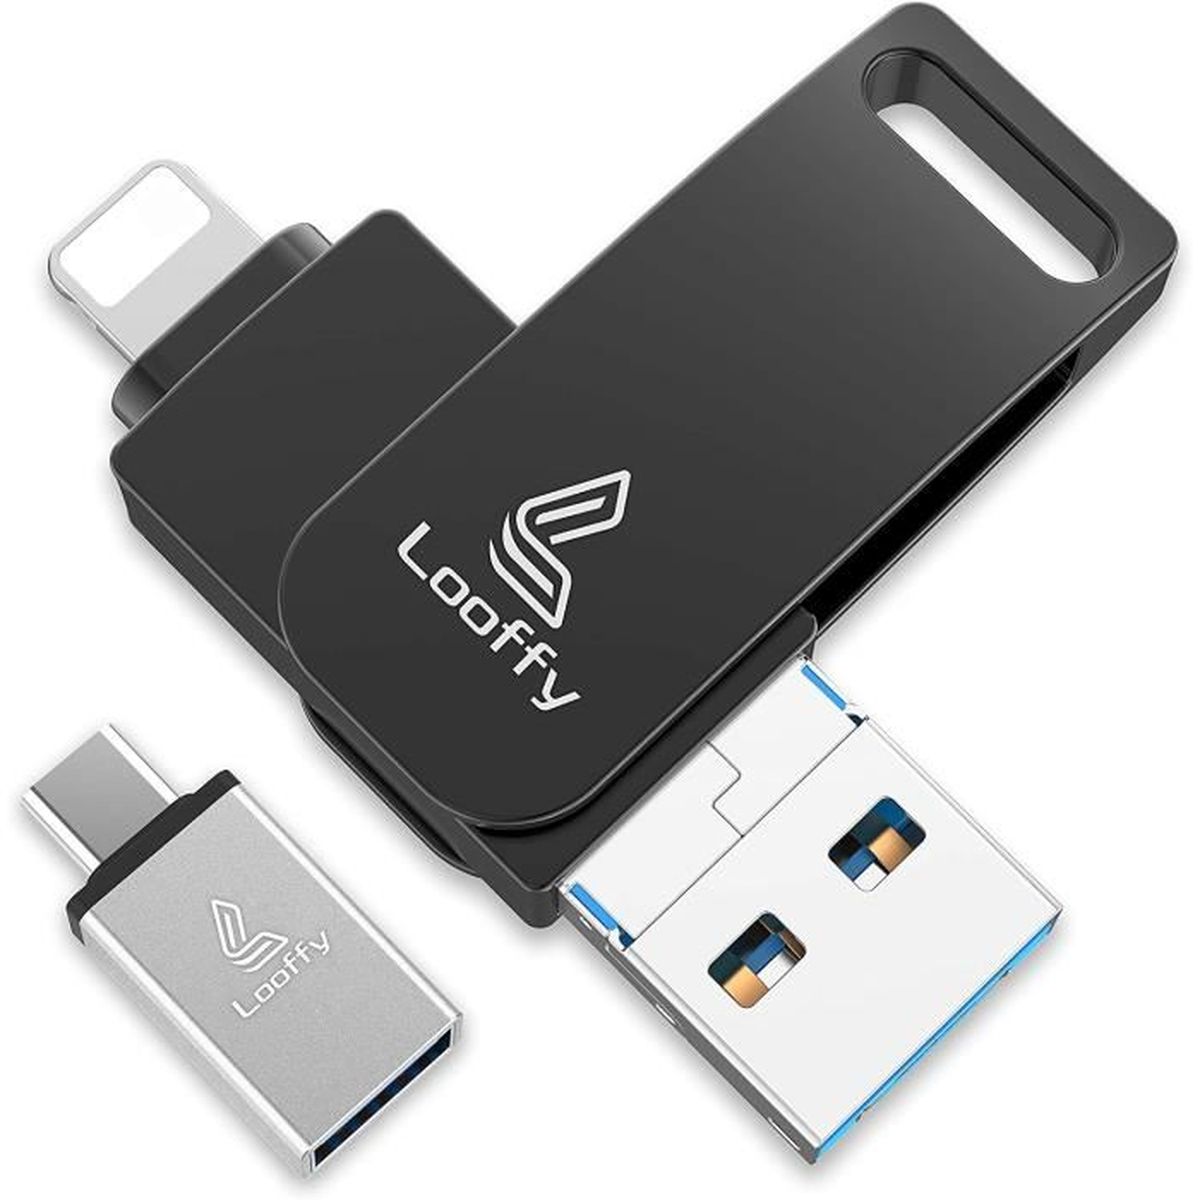 Looffy Clé USB pour iPhone iPad Cle USB 32 Go 3.0 iOS USB Flash Drive Mémoire Stick pour iPhone iPad Android Smartphone Tablette PC Macbook 4 in 1 